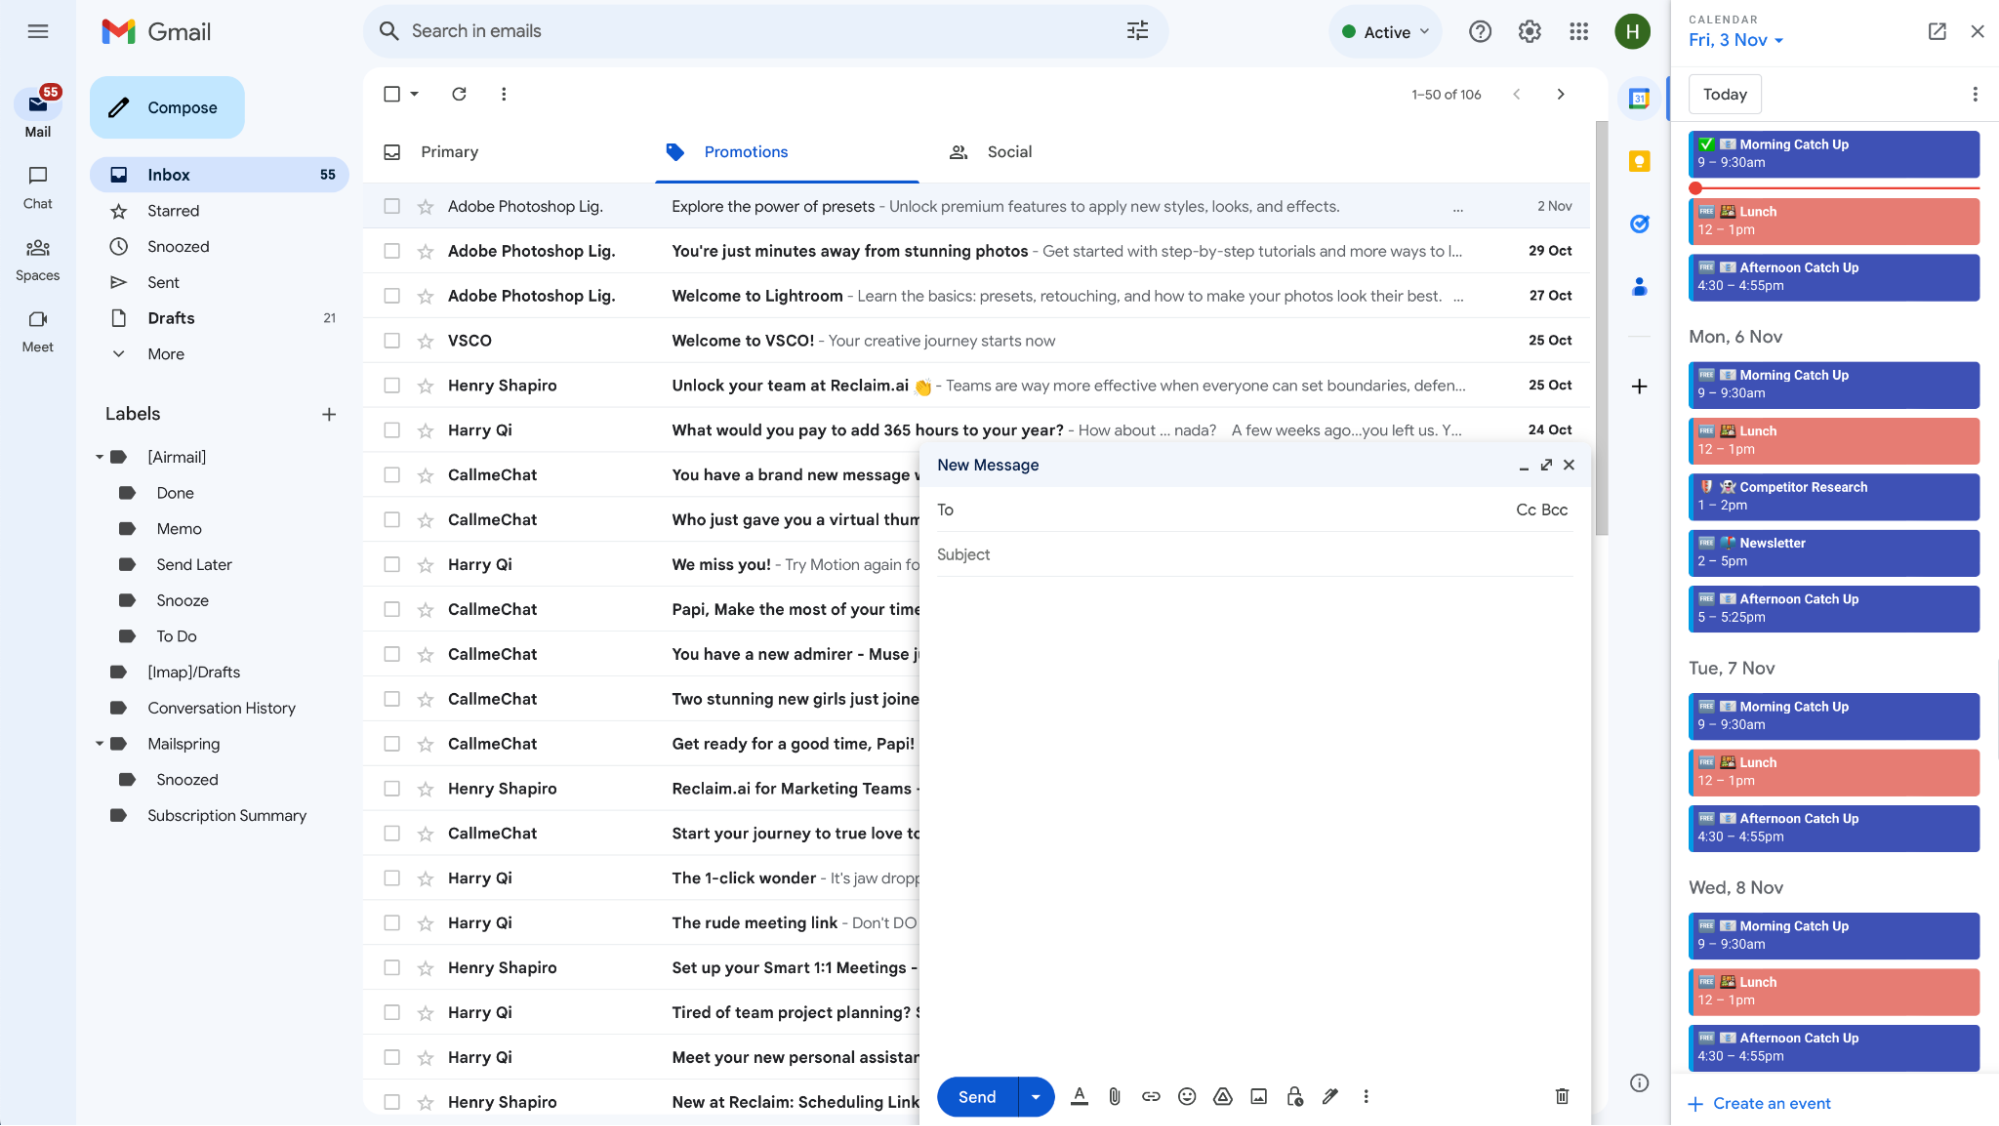 Yahoo Mail Go – Apps no Google Play